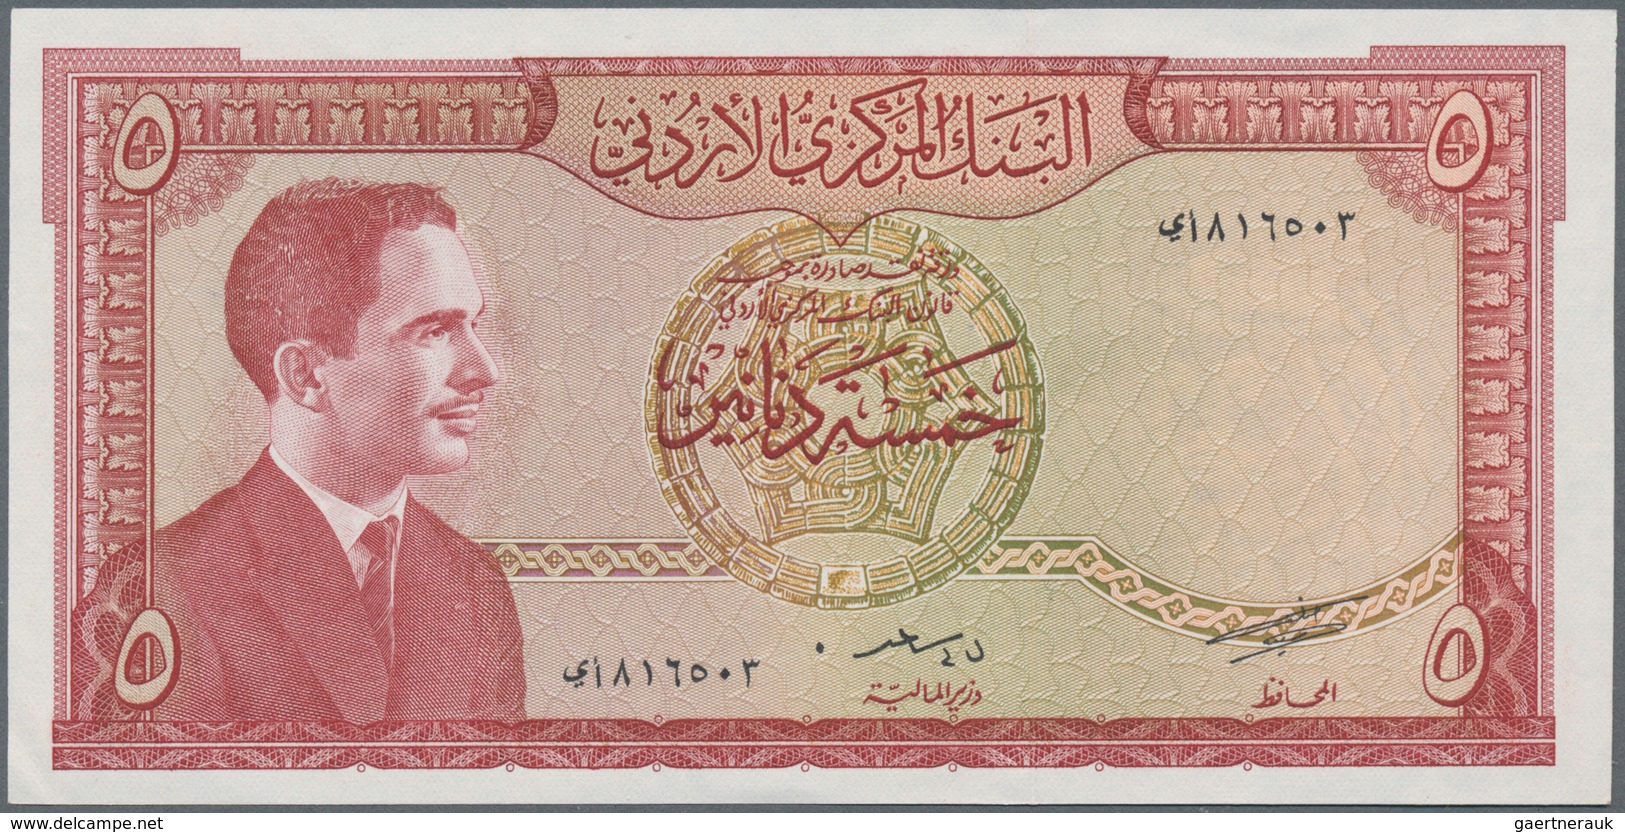 Jordan / Jordanien: Pair With 5 Dinars ND(1960's) P.15b (UNC) And 20 Dinars ND(1988) P.21c (UNC). (2 - Jordanie